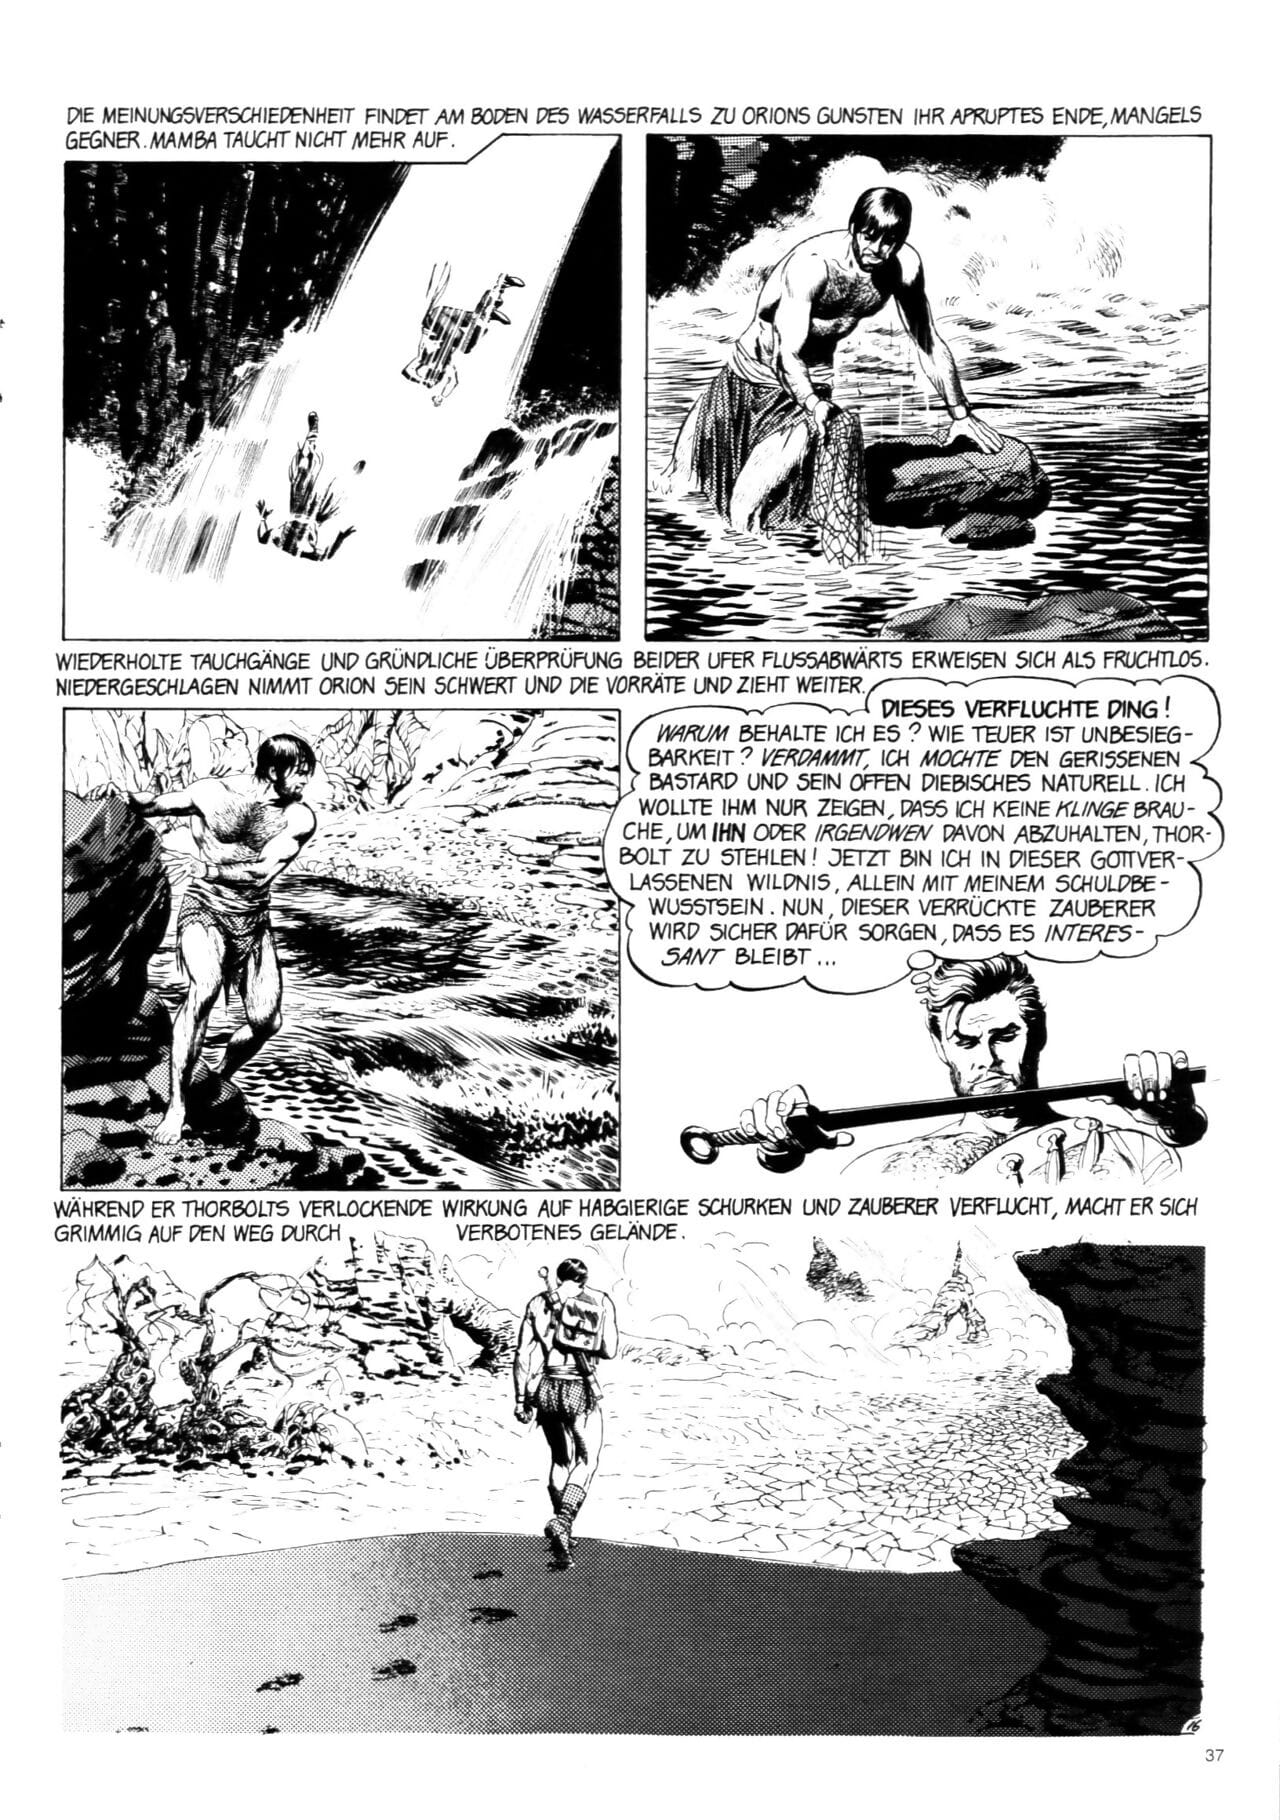 schwermetall #039 часть 2 page 1